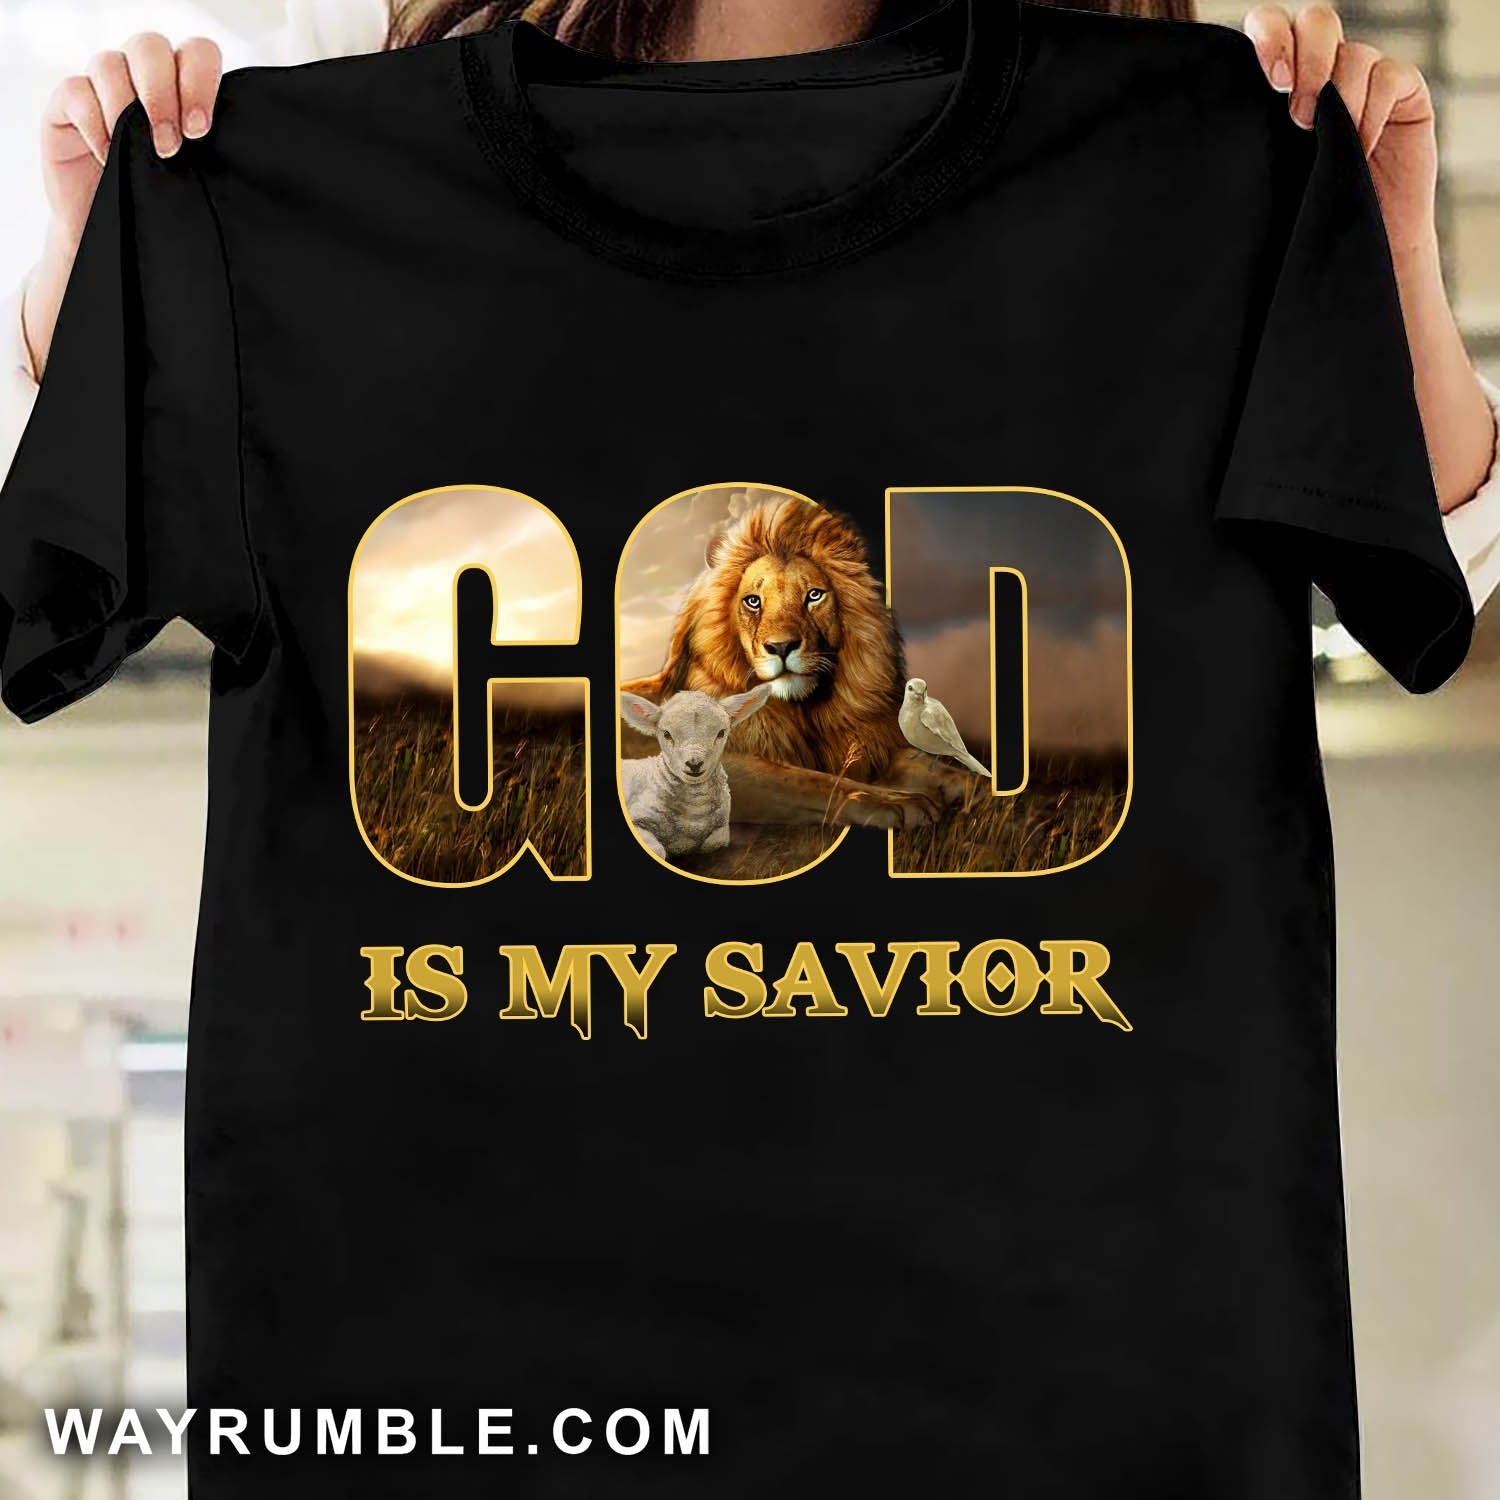 Lion of Judah, Lamb of God, Beautiful spirits, God is my savior – Jesus T Shirt